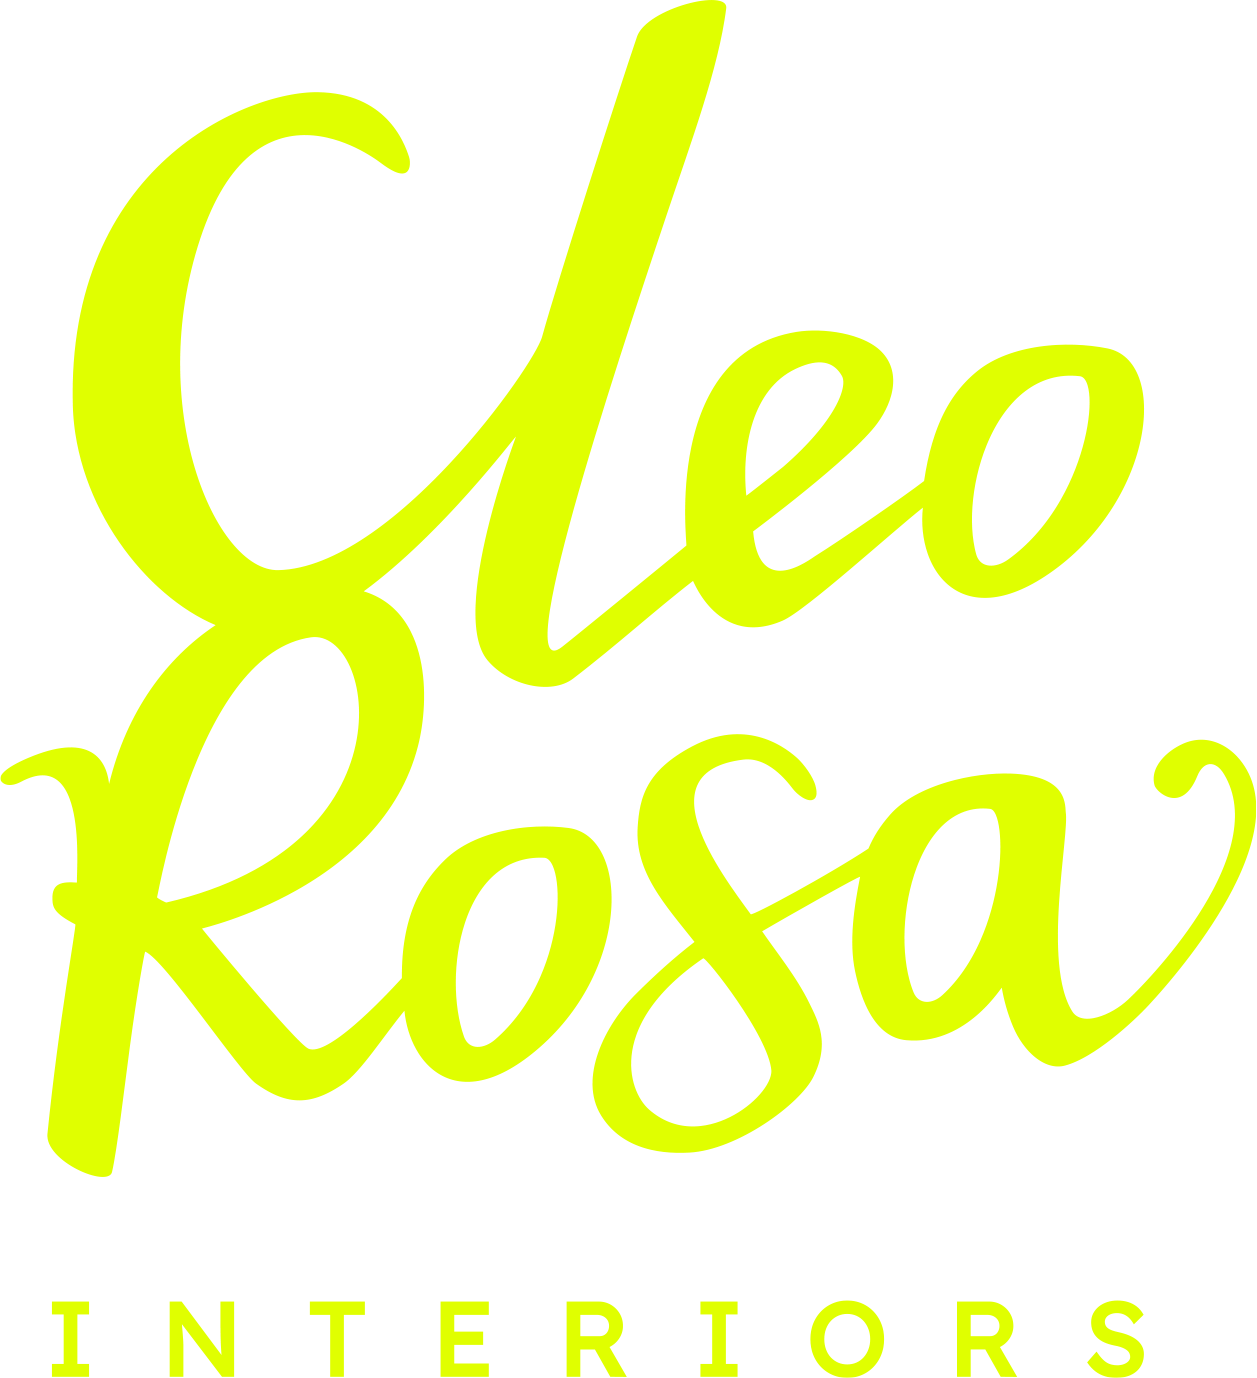 CLEO ROSA INTERIORS